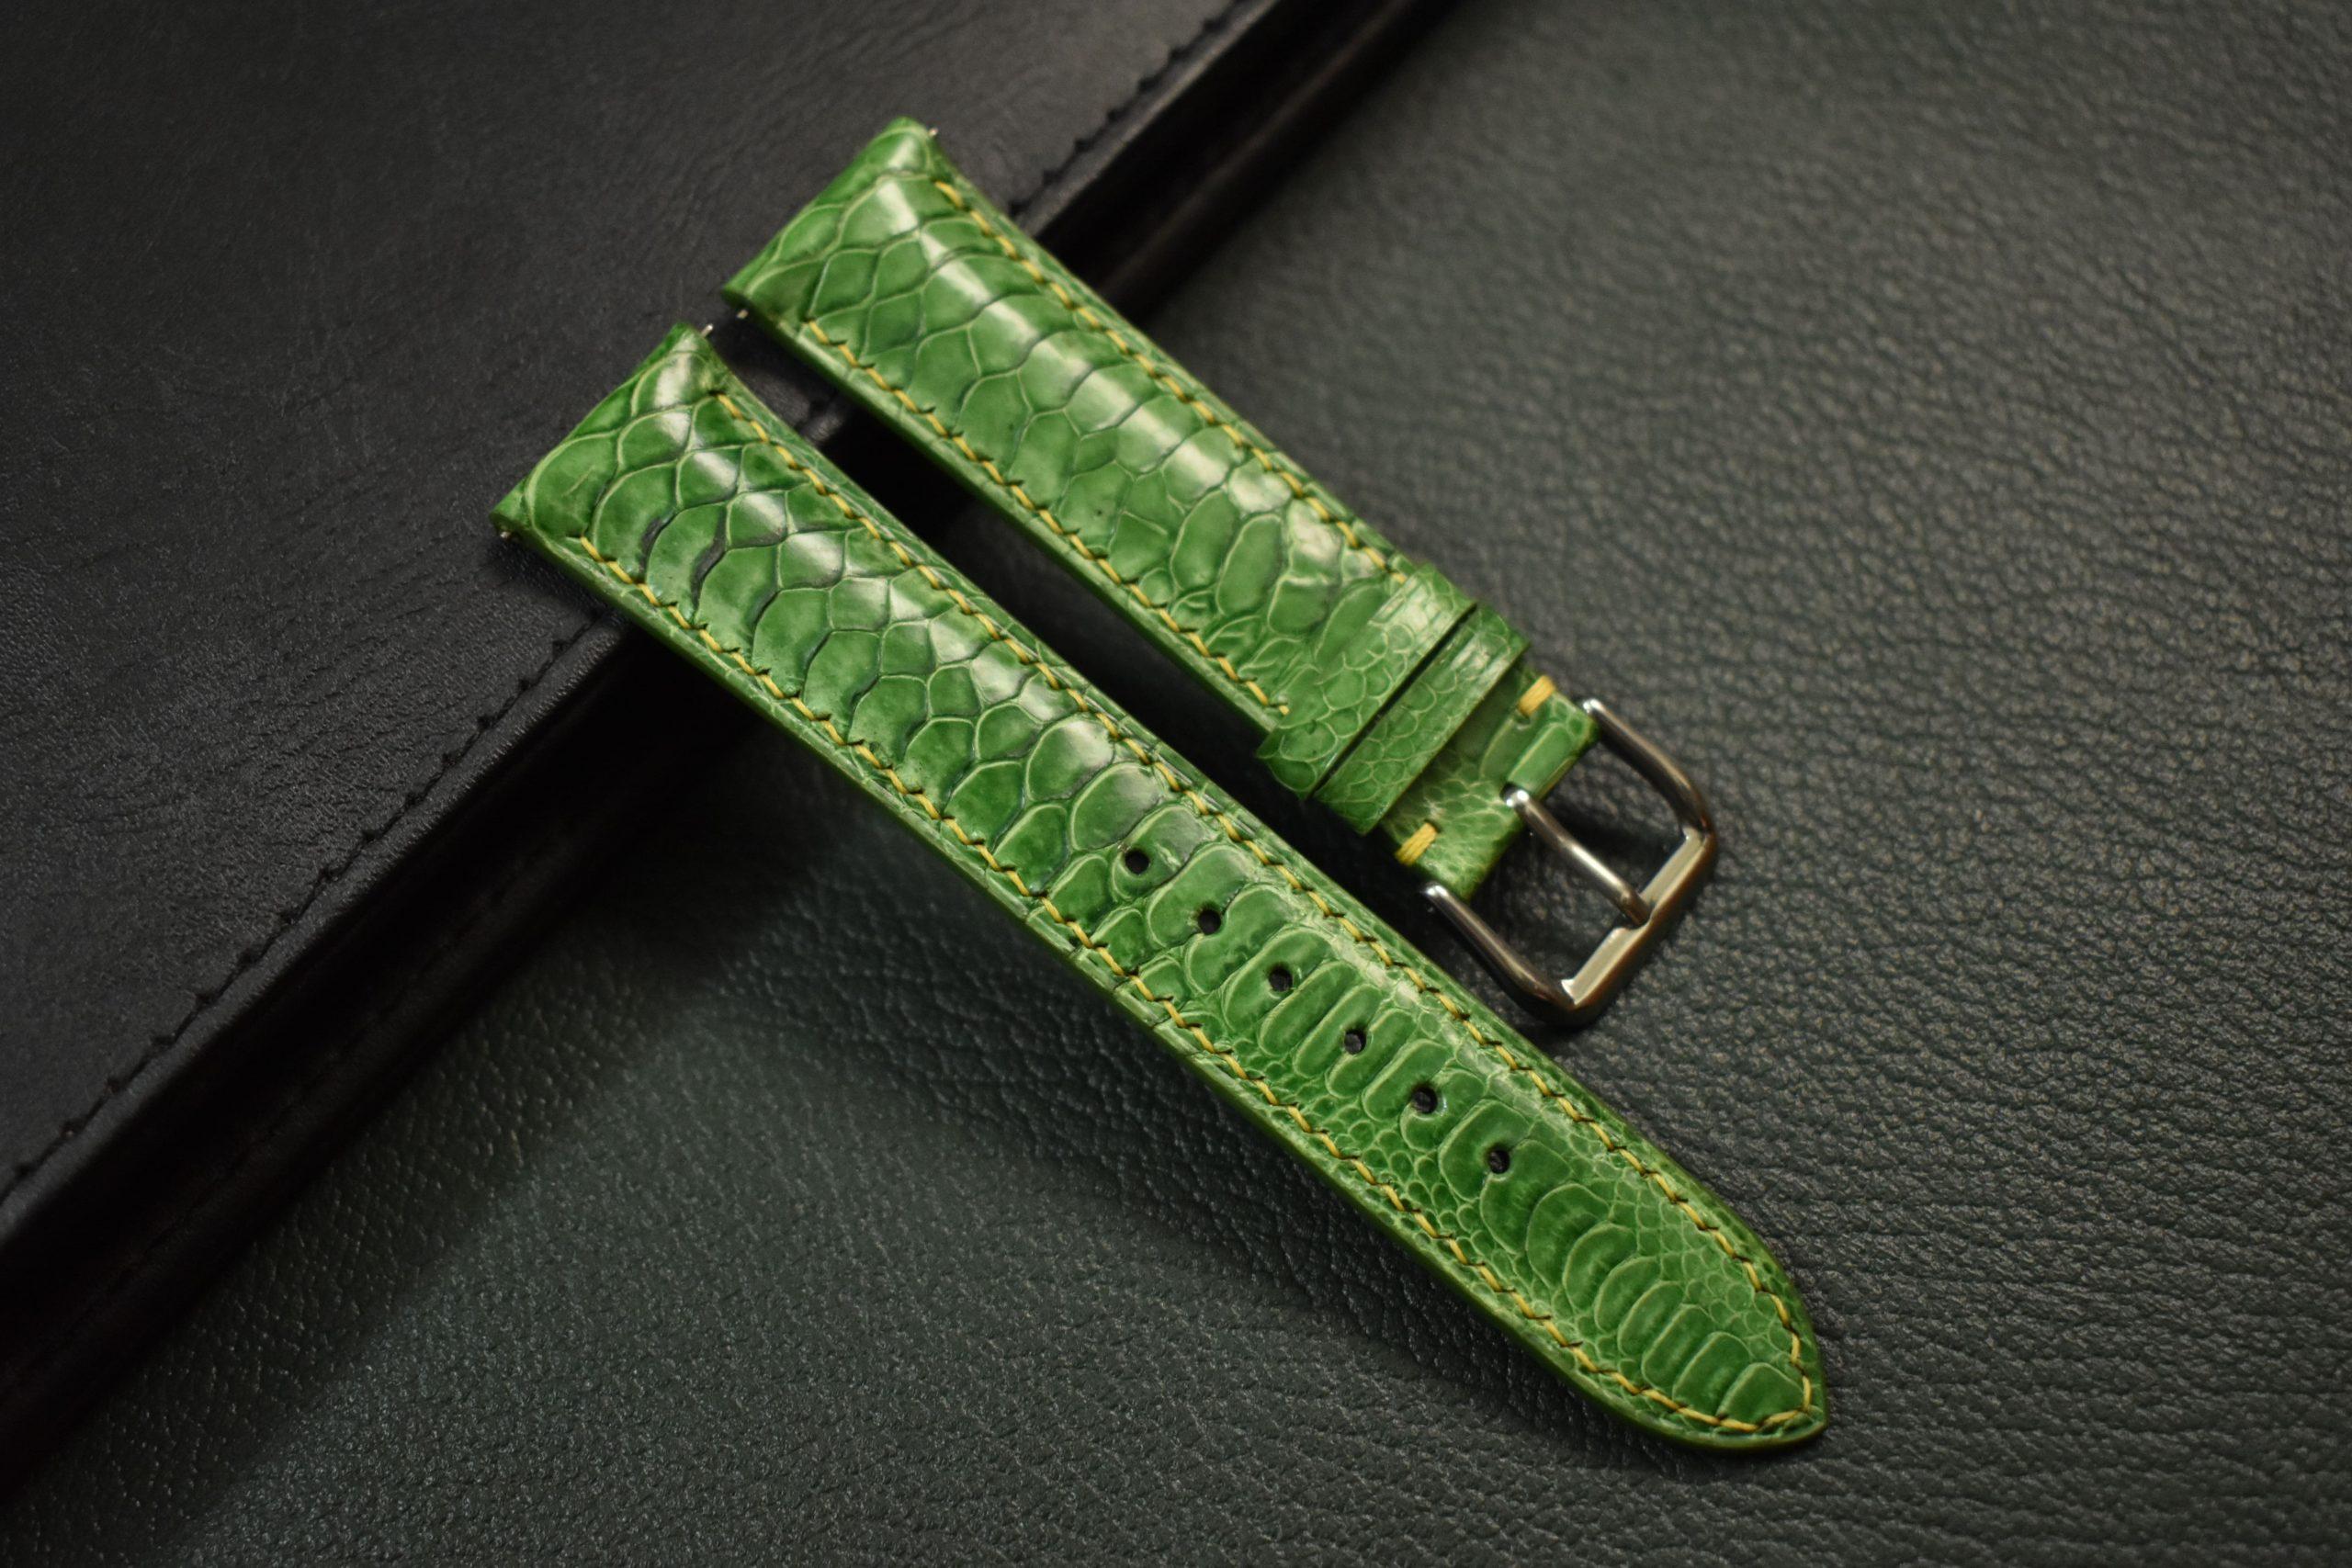 Hephakee Bespoke EPI Leather Watch Strap Handmade E01